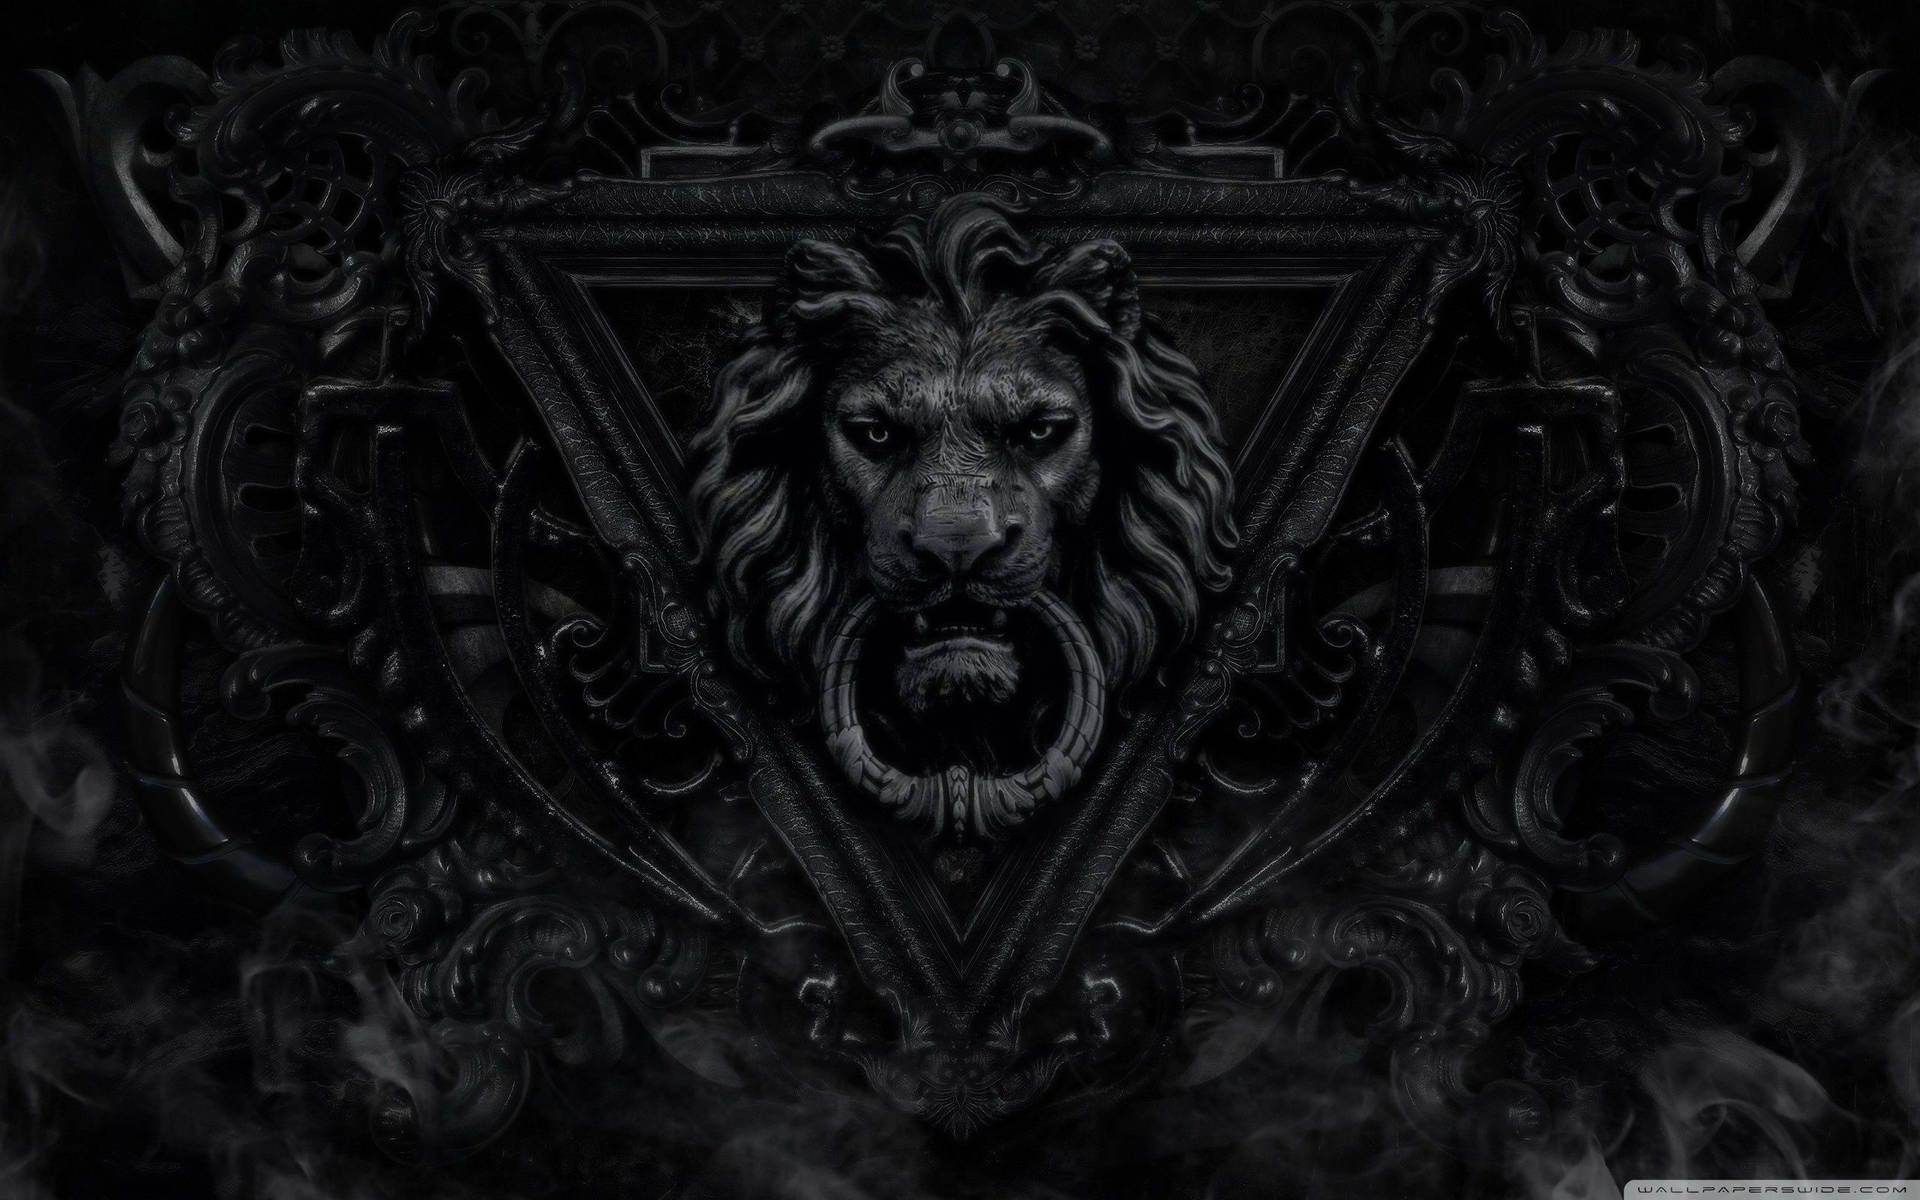 Dark Gothic Lion Door Knocker